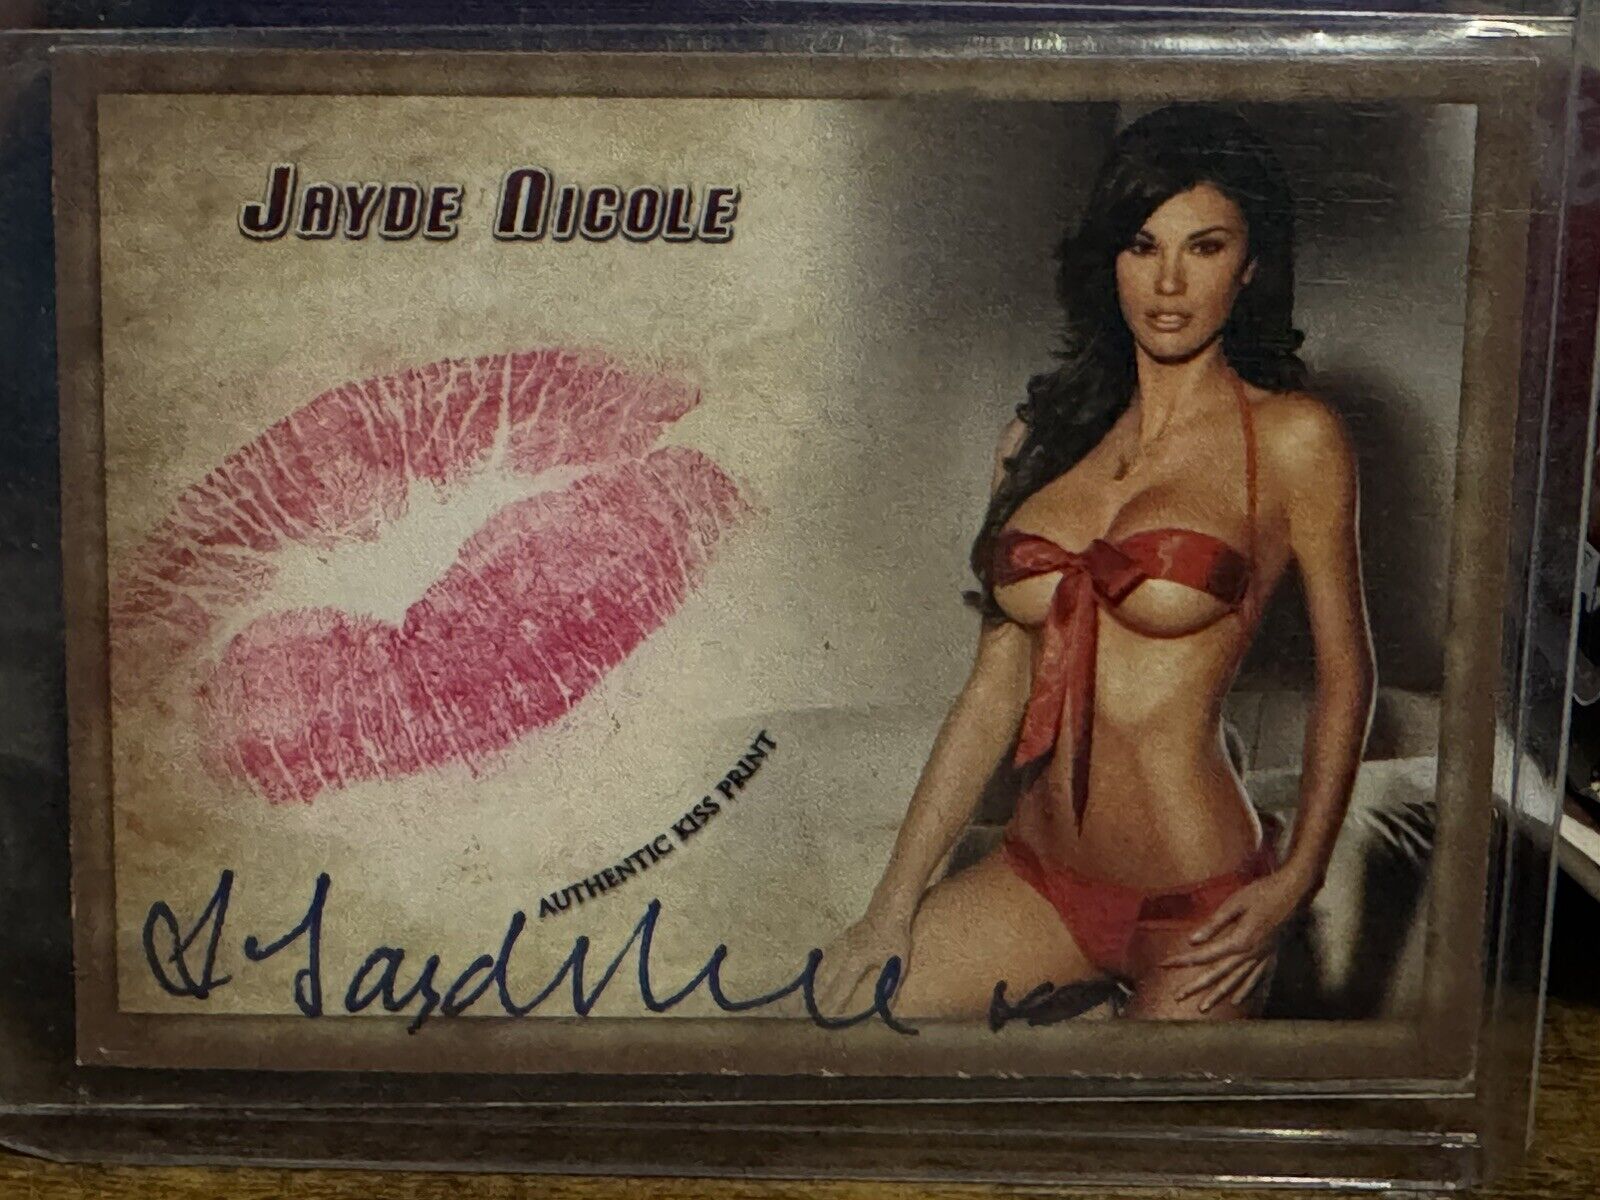 2016 Collectors Expo Jayde Nicole Kiss Lipstick Autograph Playboy Playmate